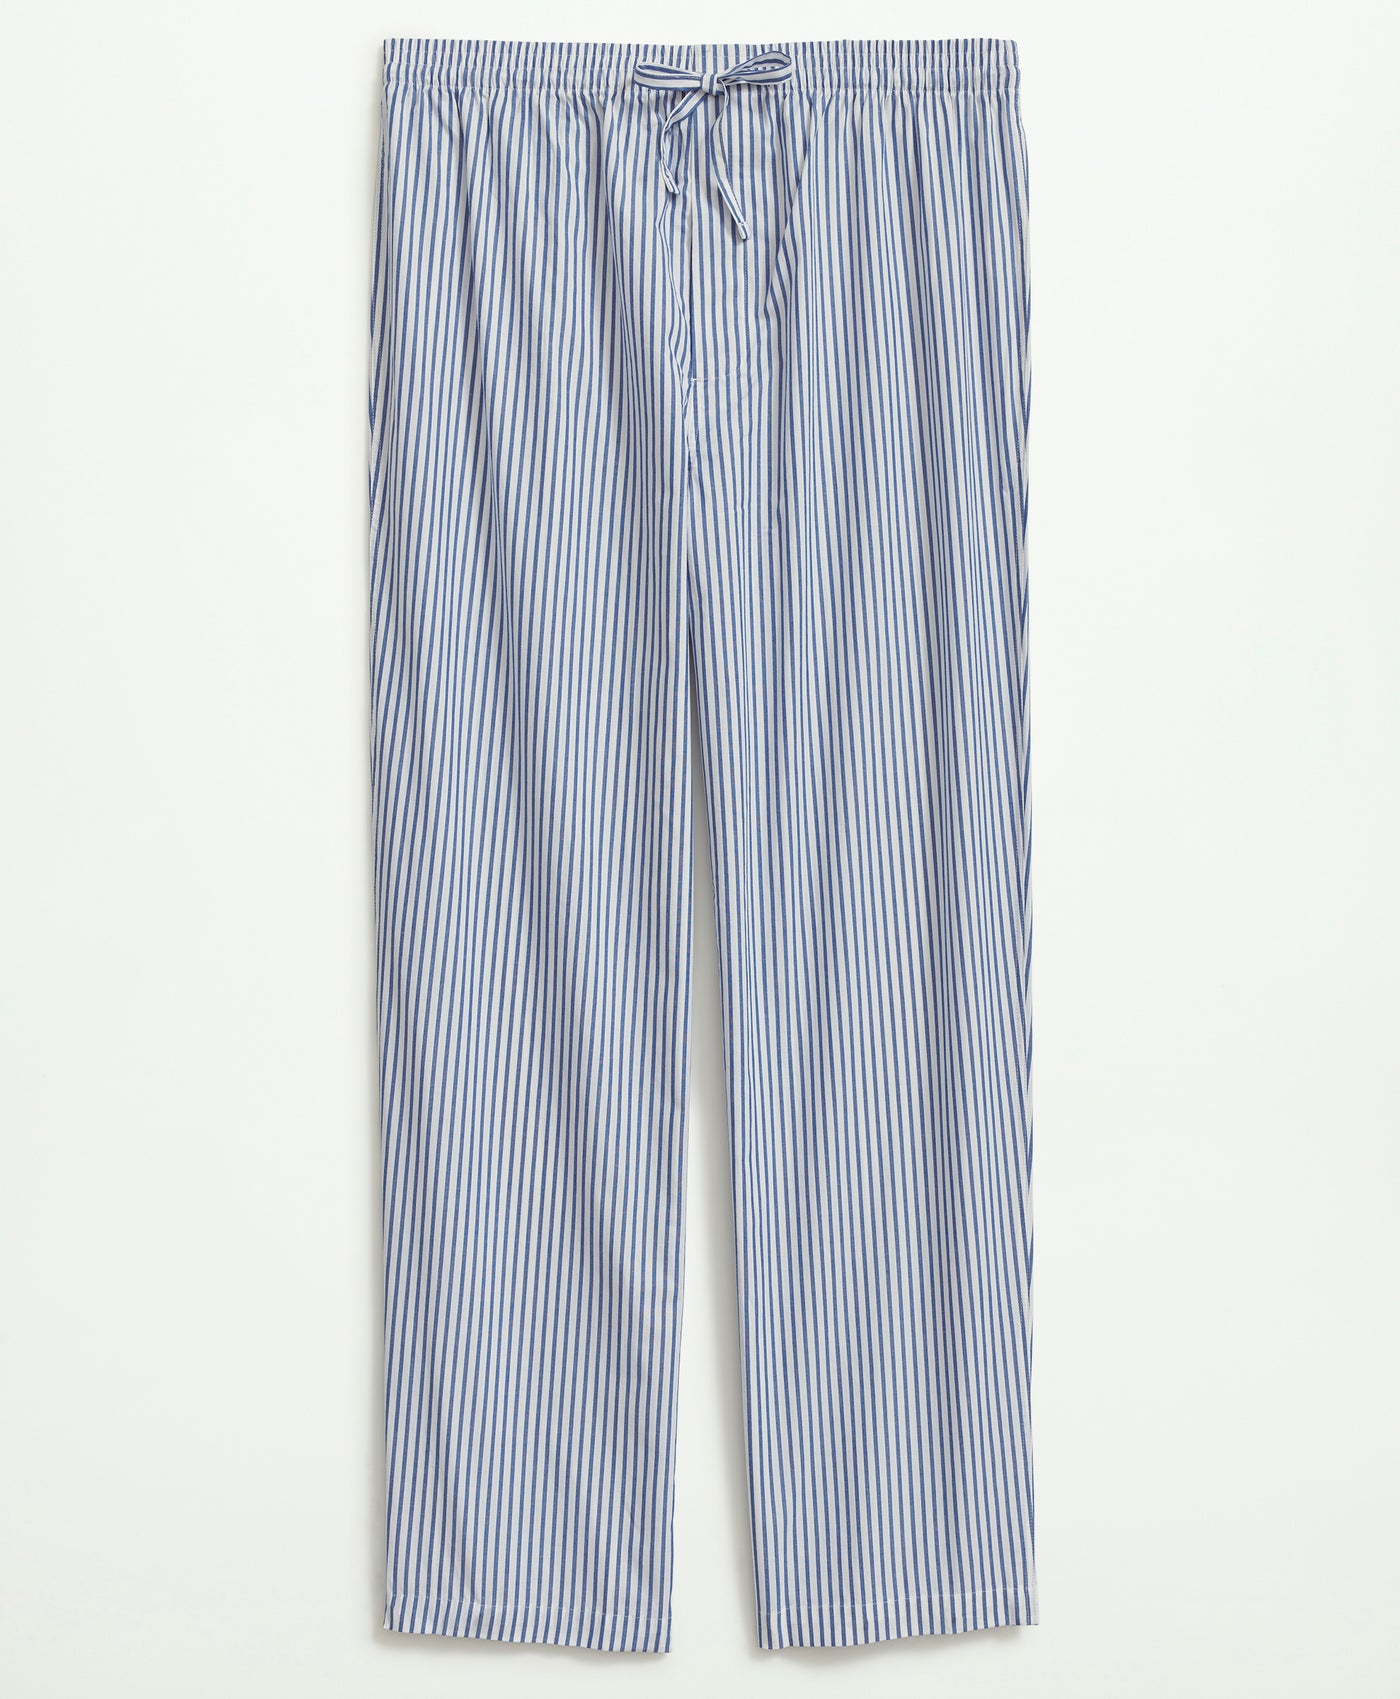 Cotton Broadcloth Bengal Stripe Pajamas - Brooks Brothers Canada